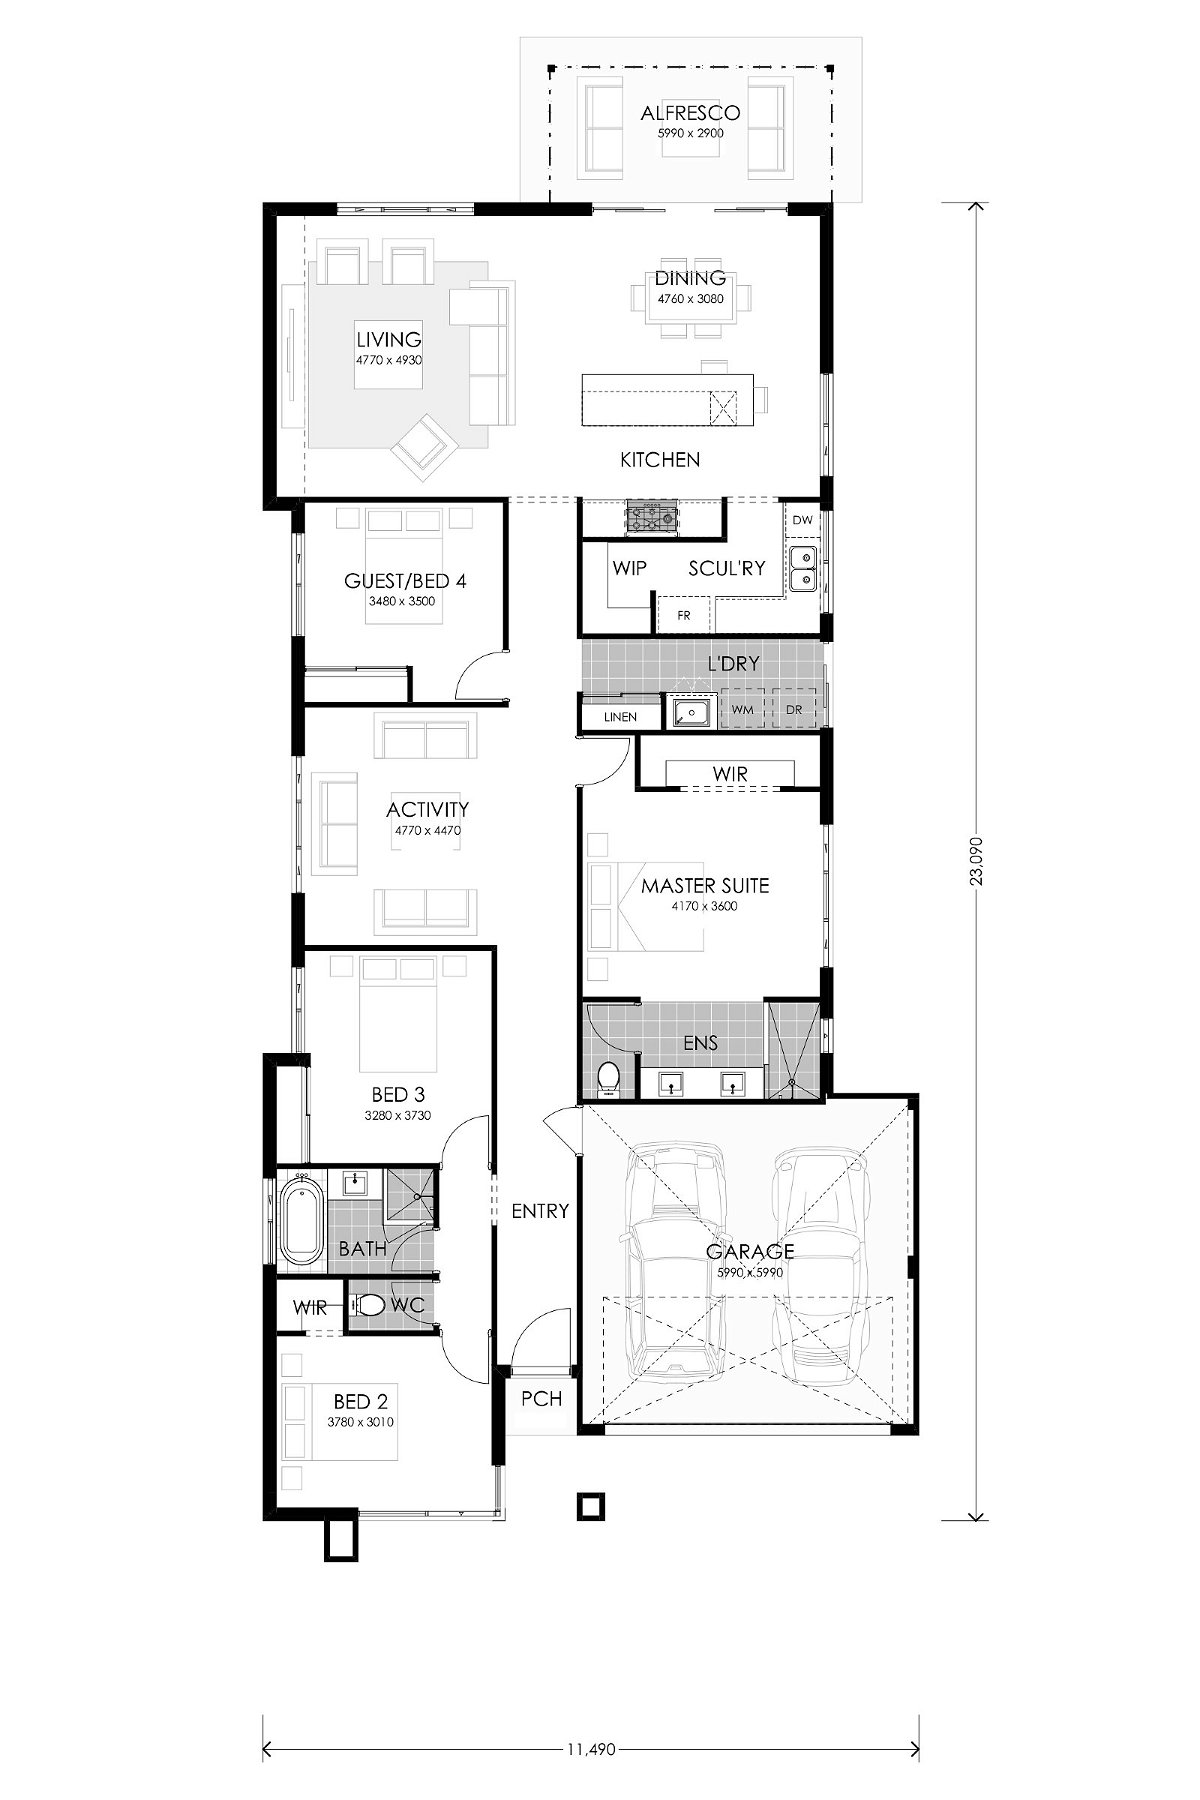 Residential Attitudes - Deja View - Floorplan - Deja View Floorplan Website